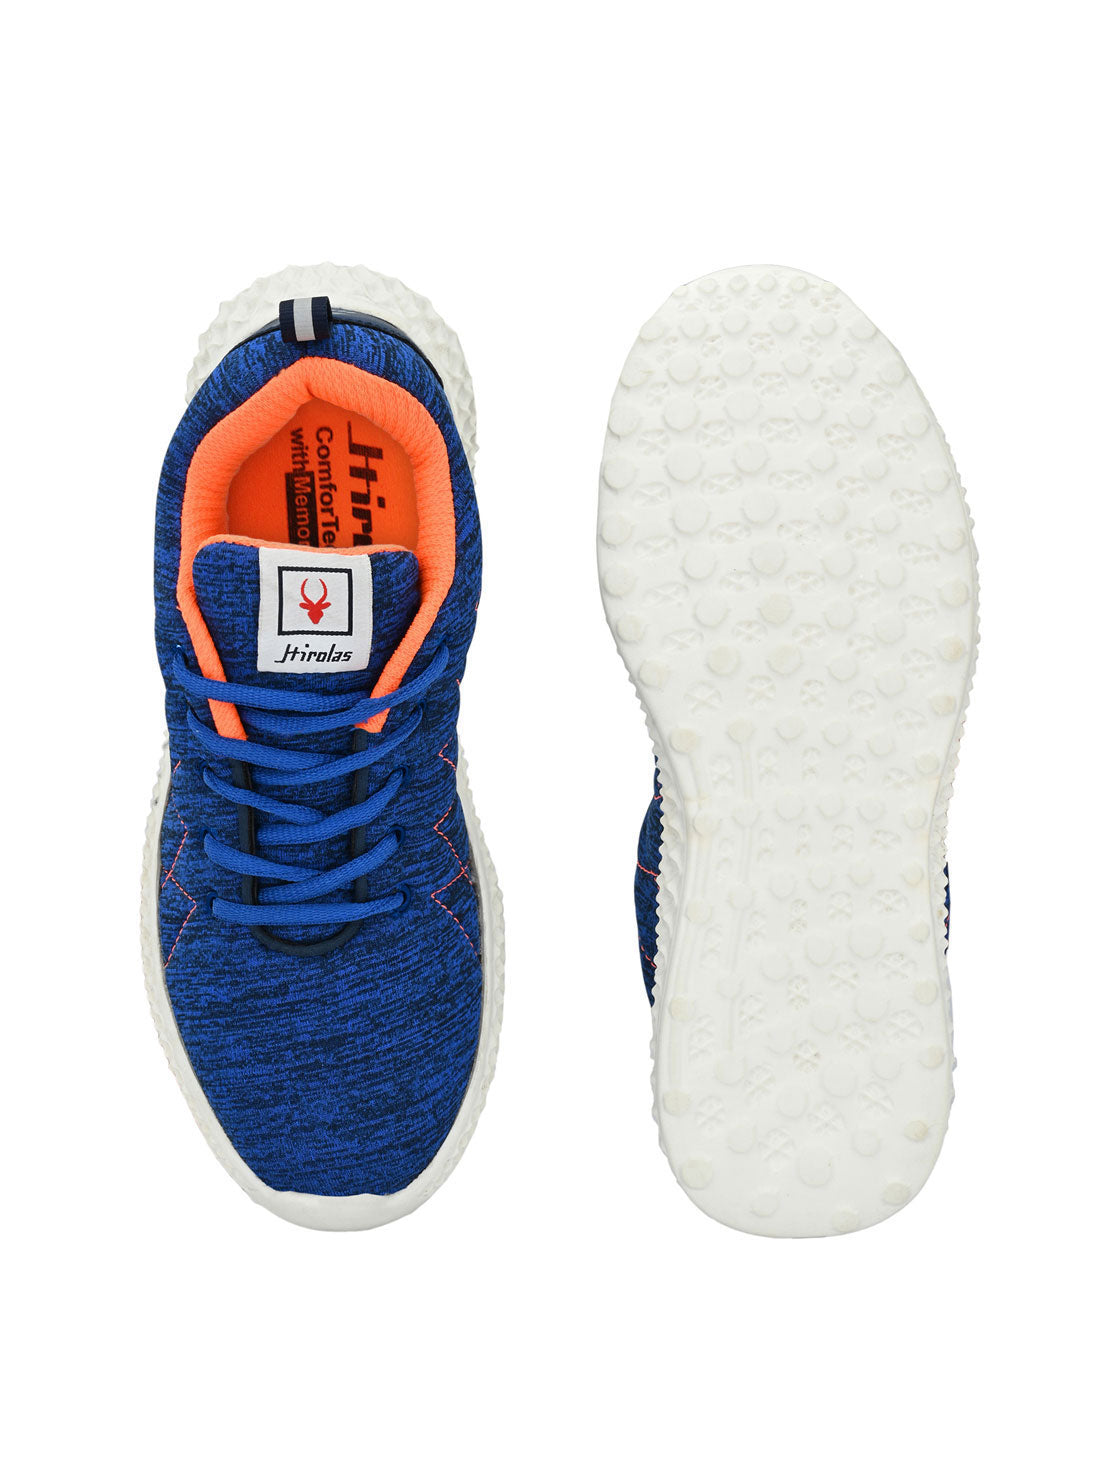 Hirolas® Men's Blue Mesh Running/Walking/Gym Lace Up Sneaker Sport Shoes (HRL2025BLU)